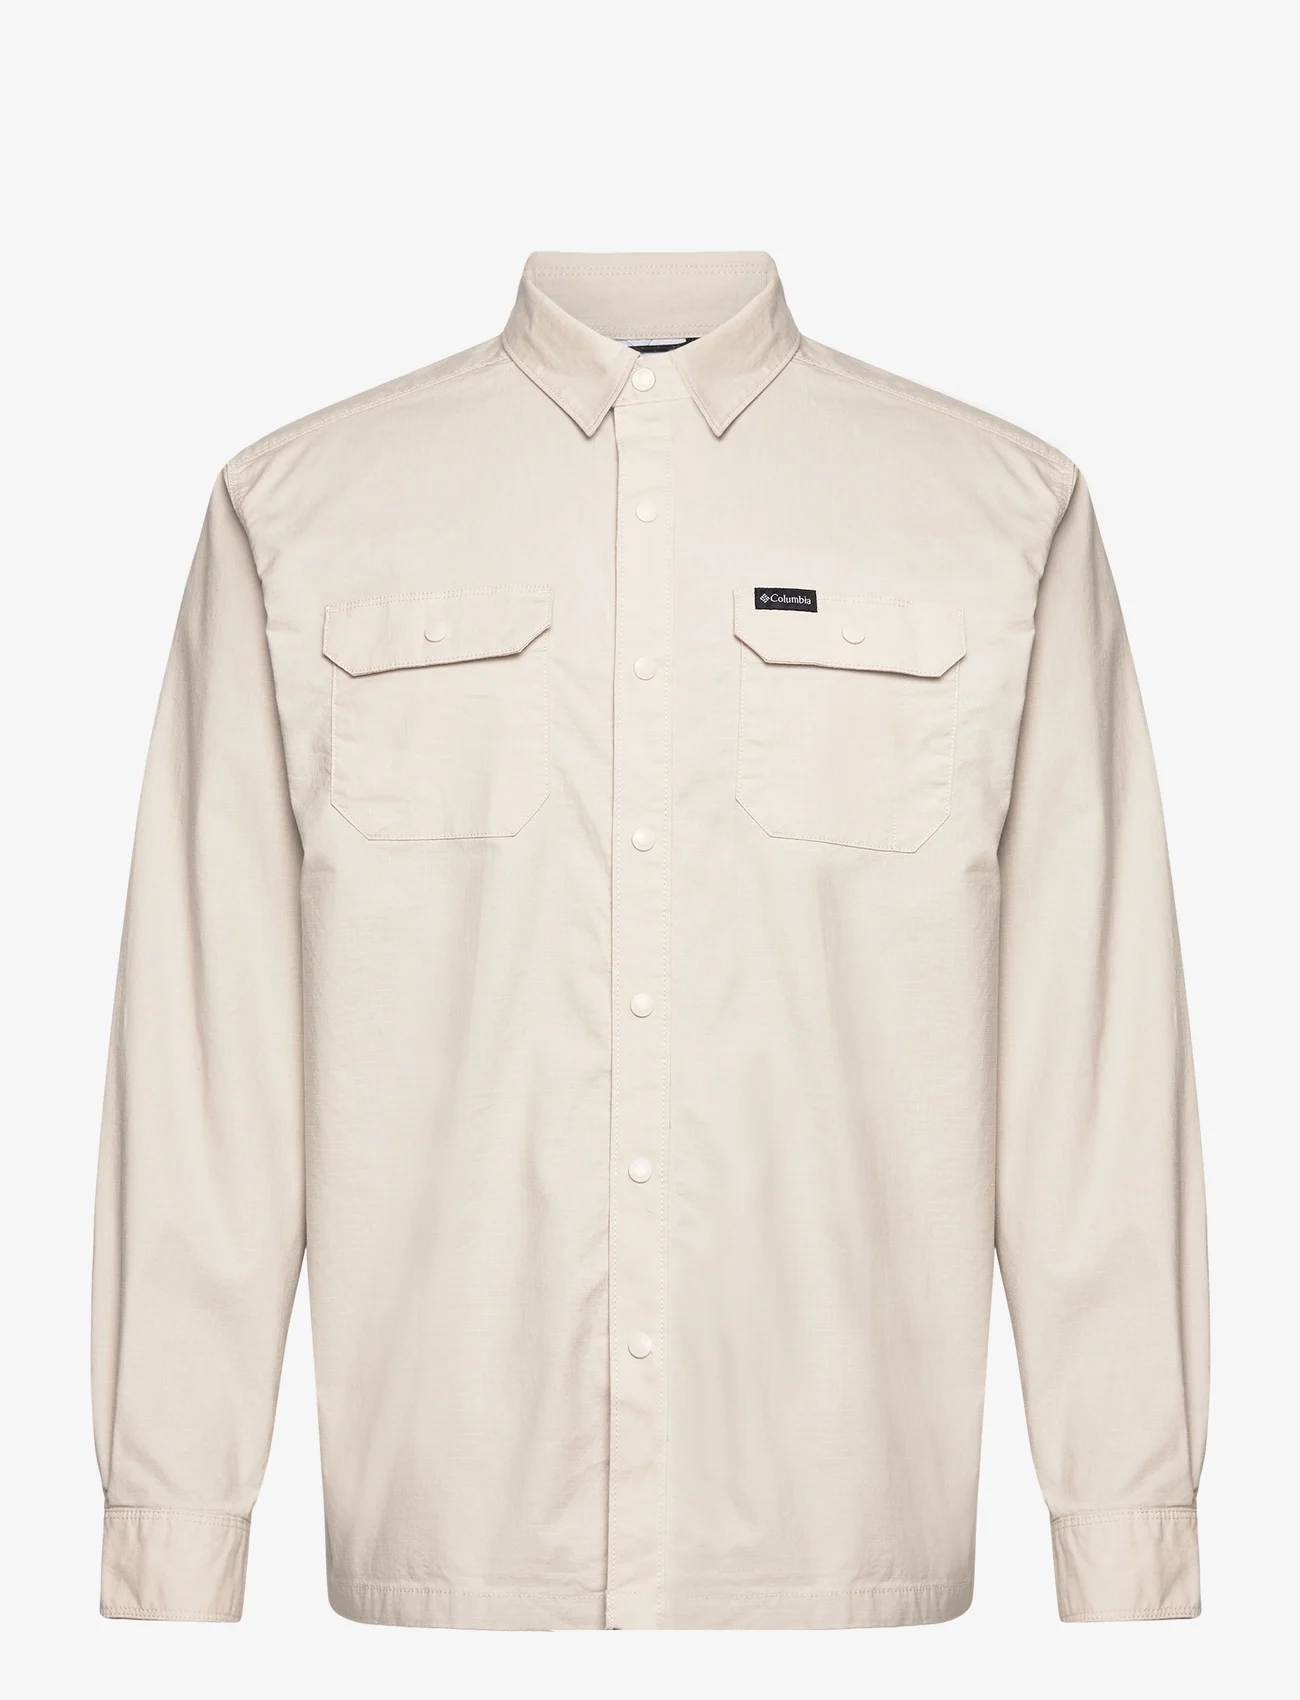 Columbia Sportswear - Landroamer Lined Shirt - basic shirts - dark stone - 0